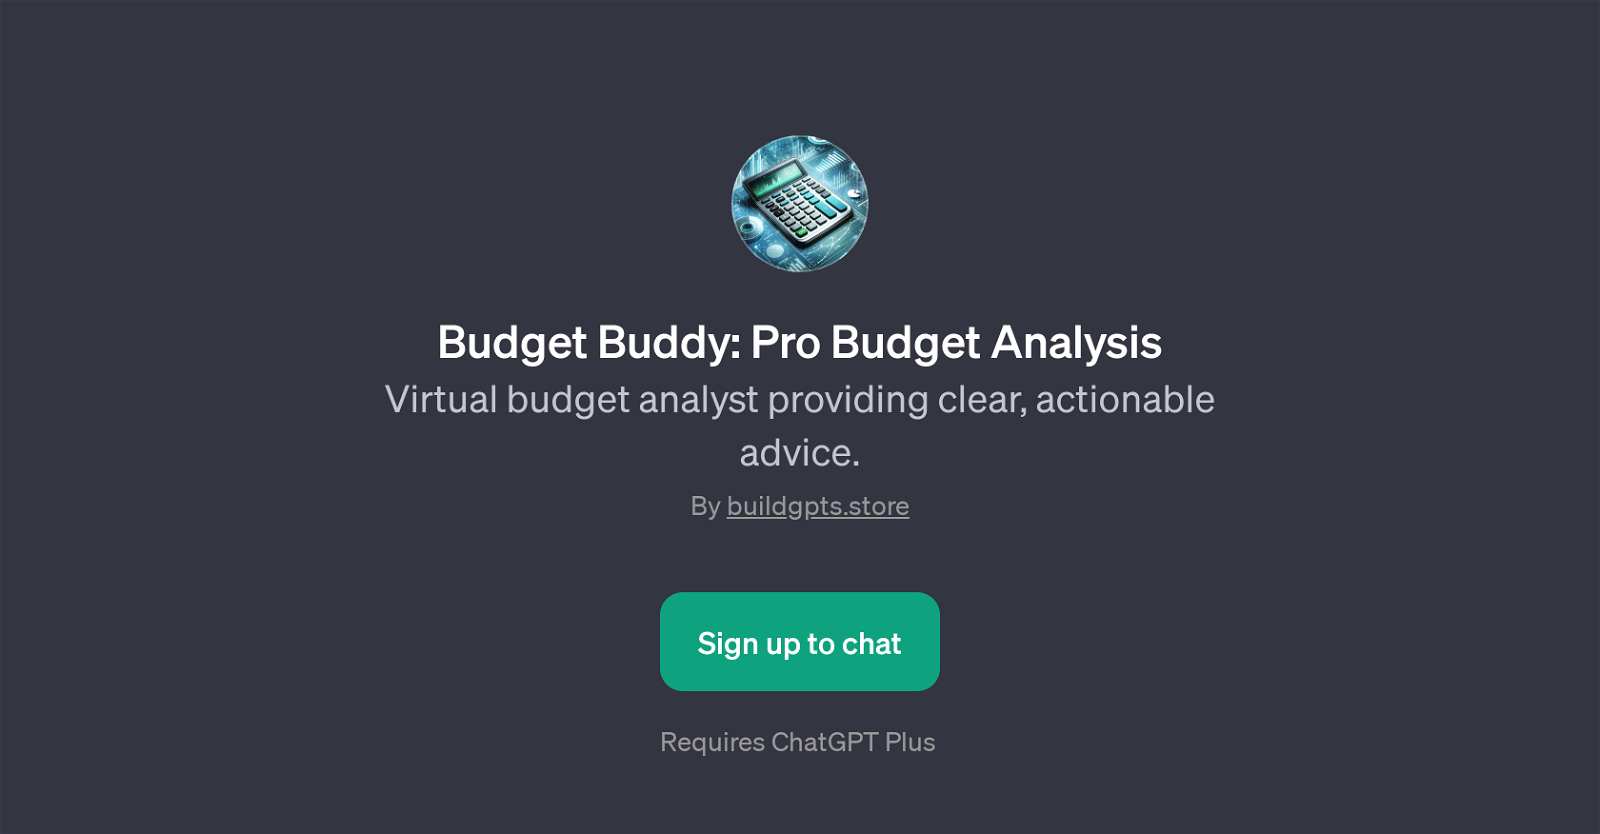 Budget Buddy: Pro Budget Analysis website